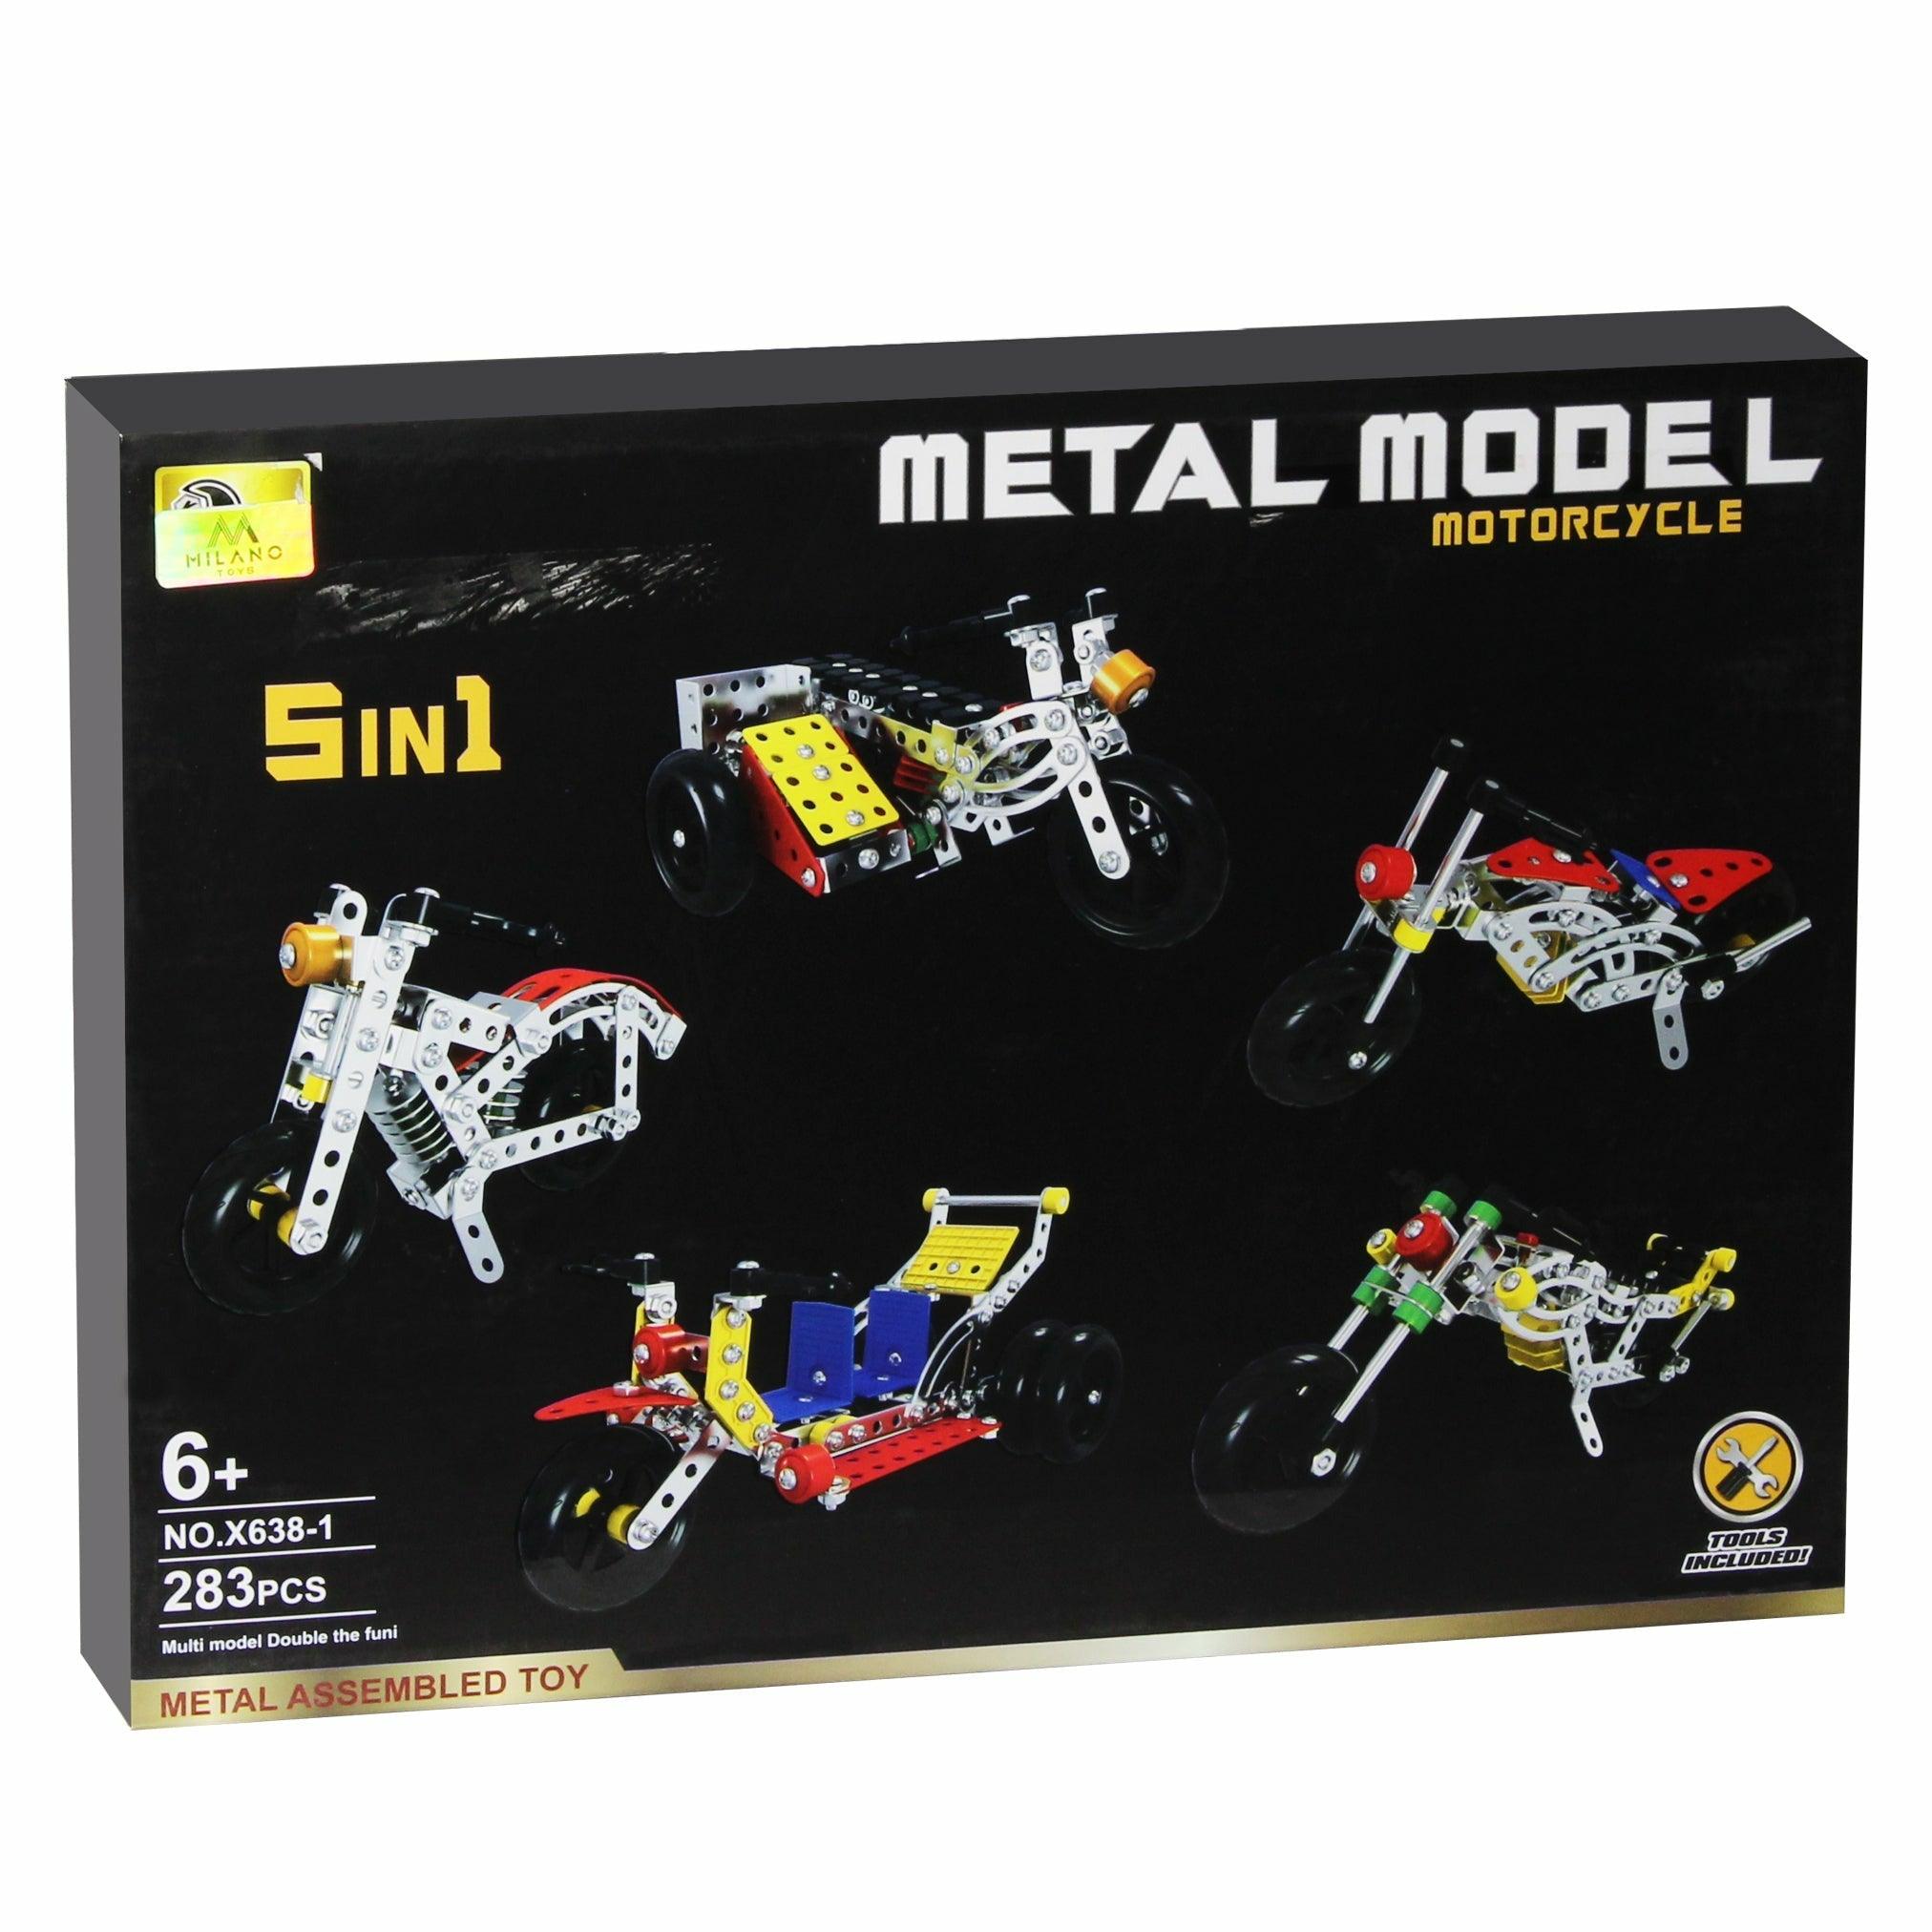 5 In 1 Metal Model Motorcycle Building Kit 6381 Stem Engineering Education Toy ( 283 Pcs) - BumbleToys - 6+ Years, Bike, Boys, Building Sets & Blocks, LEGO, Meccano